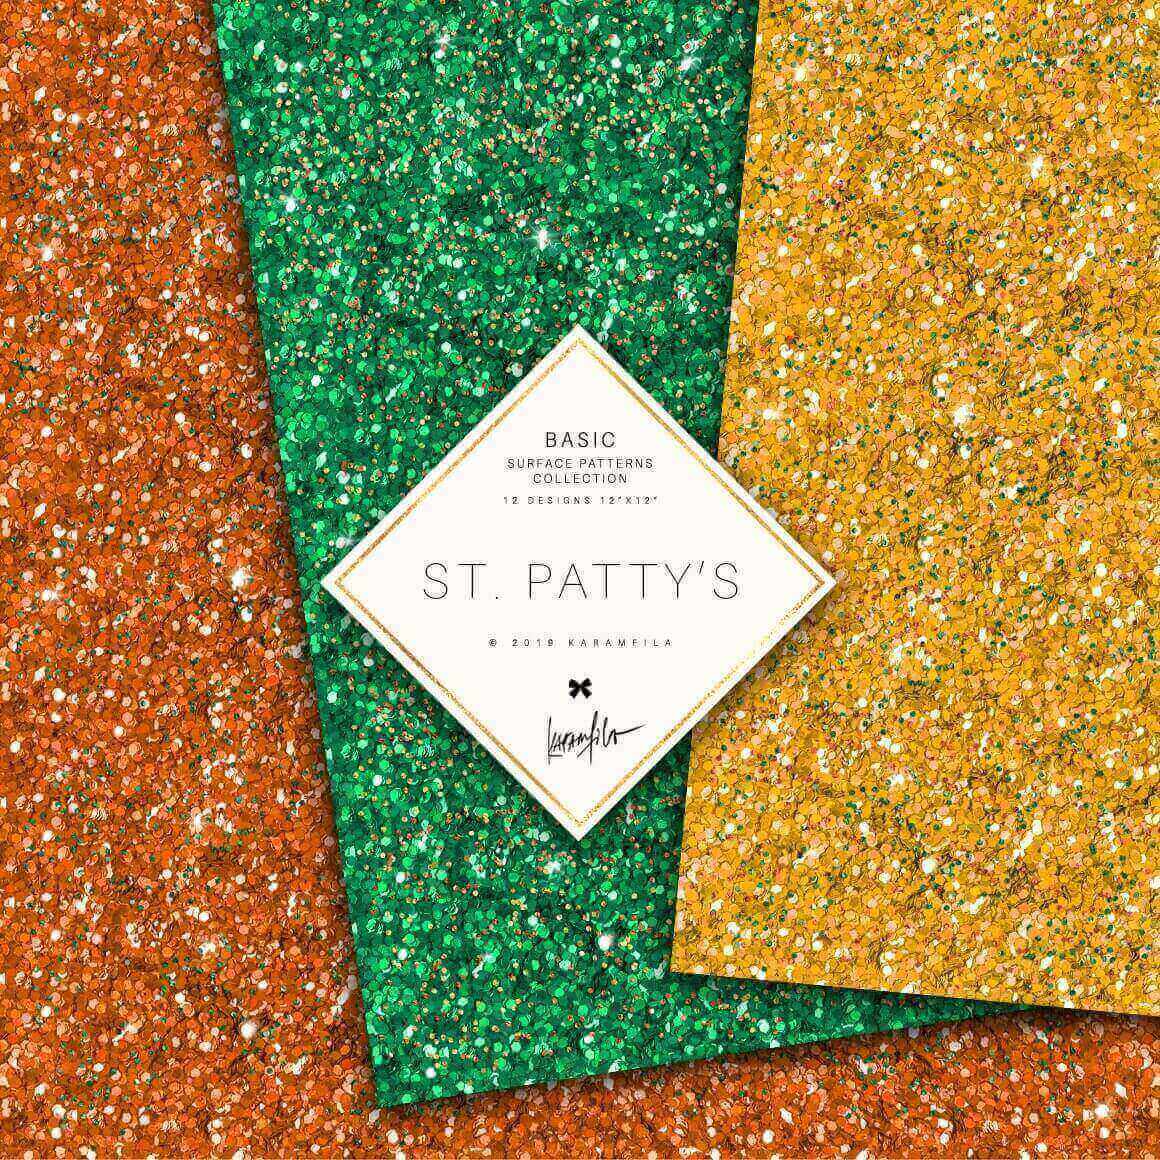 Orange, Green, Yellow Examples of St. Patty's.